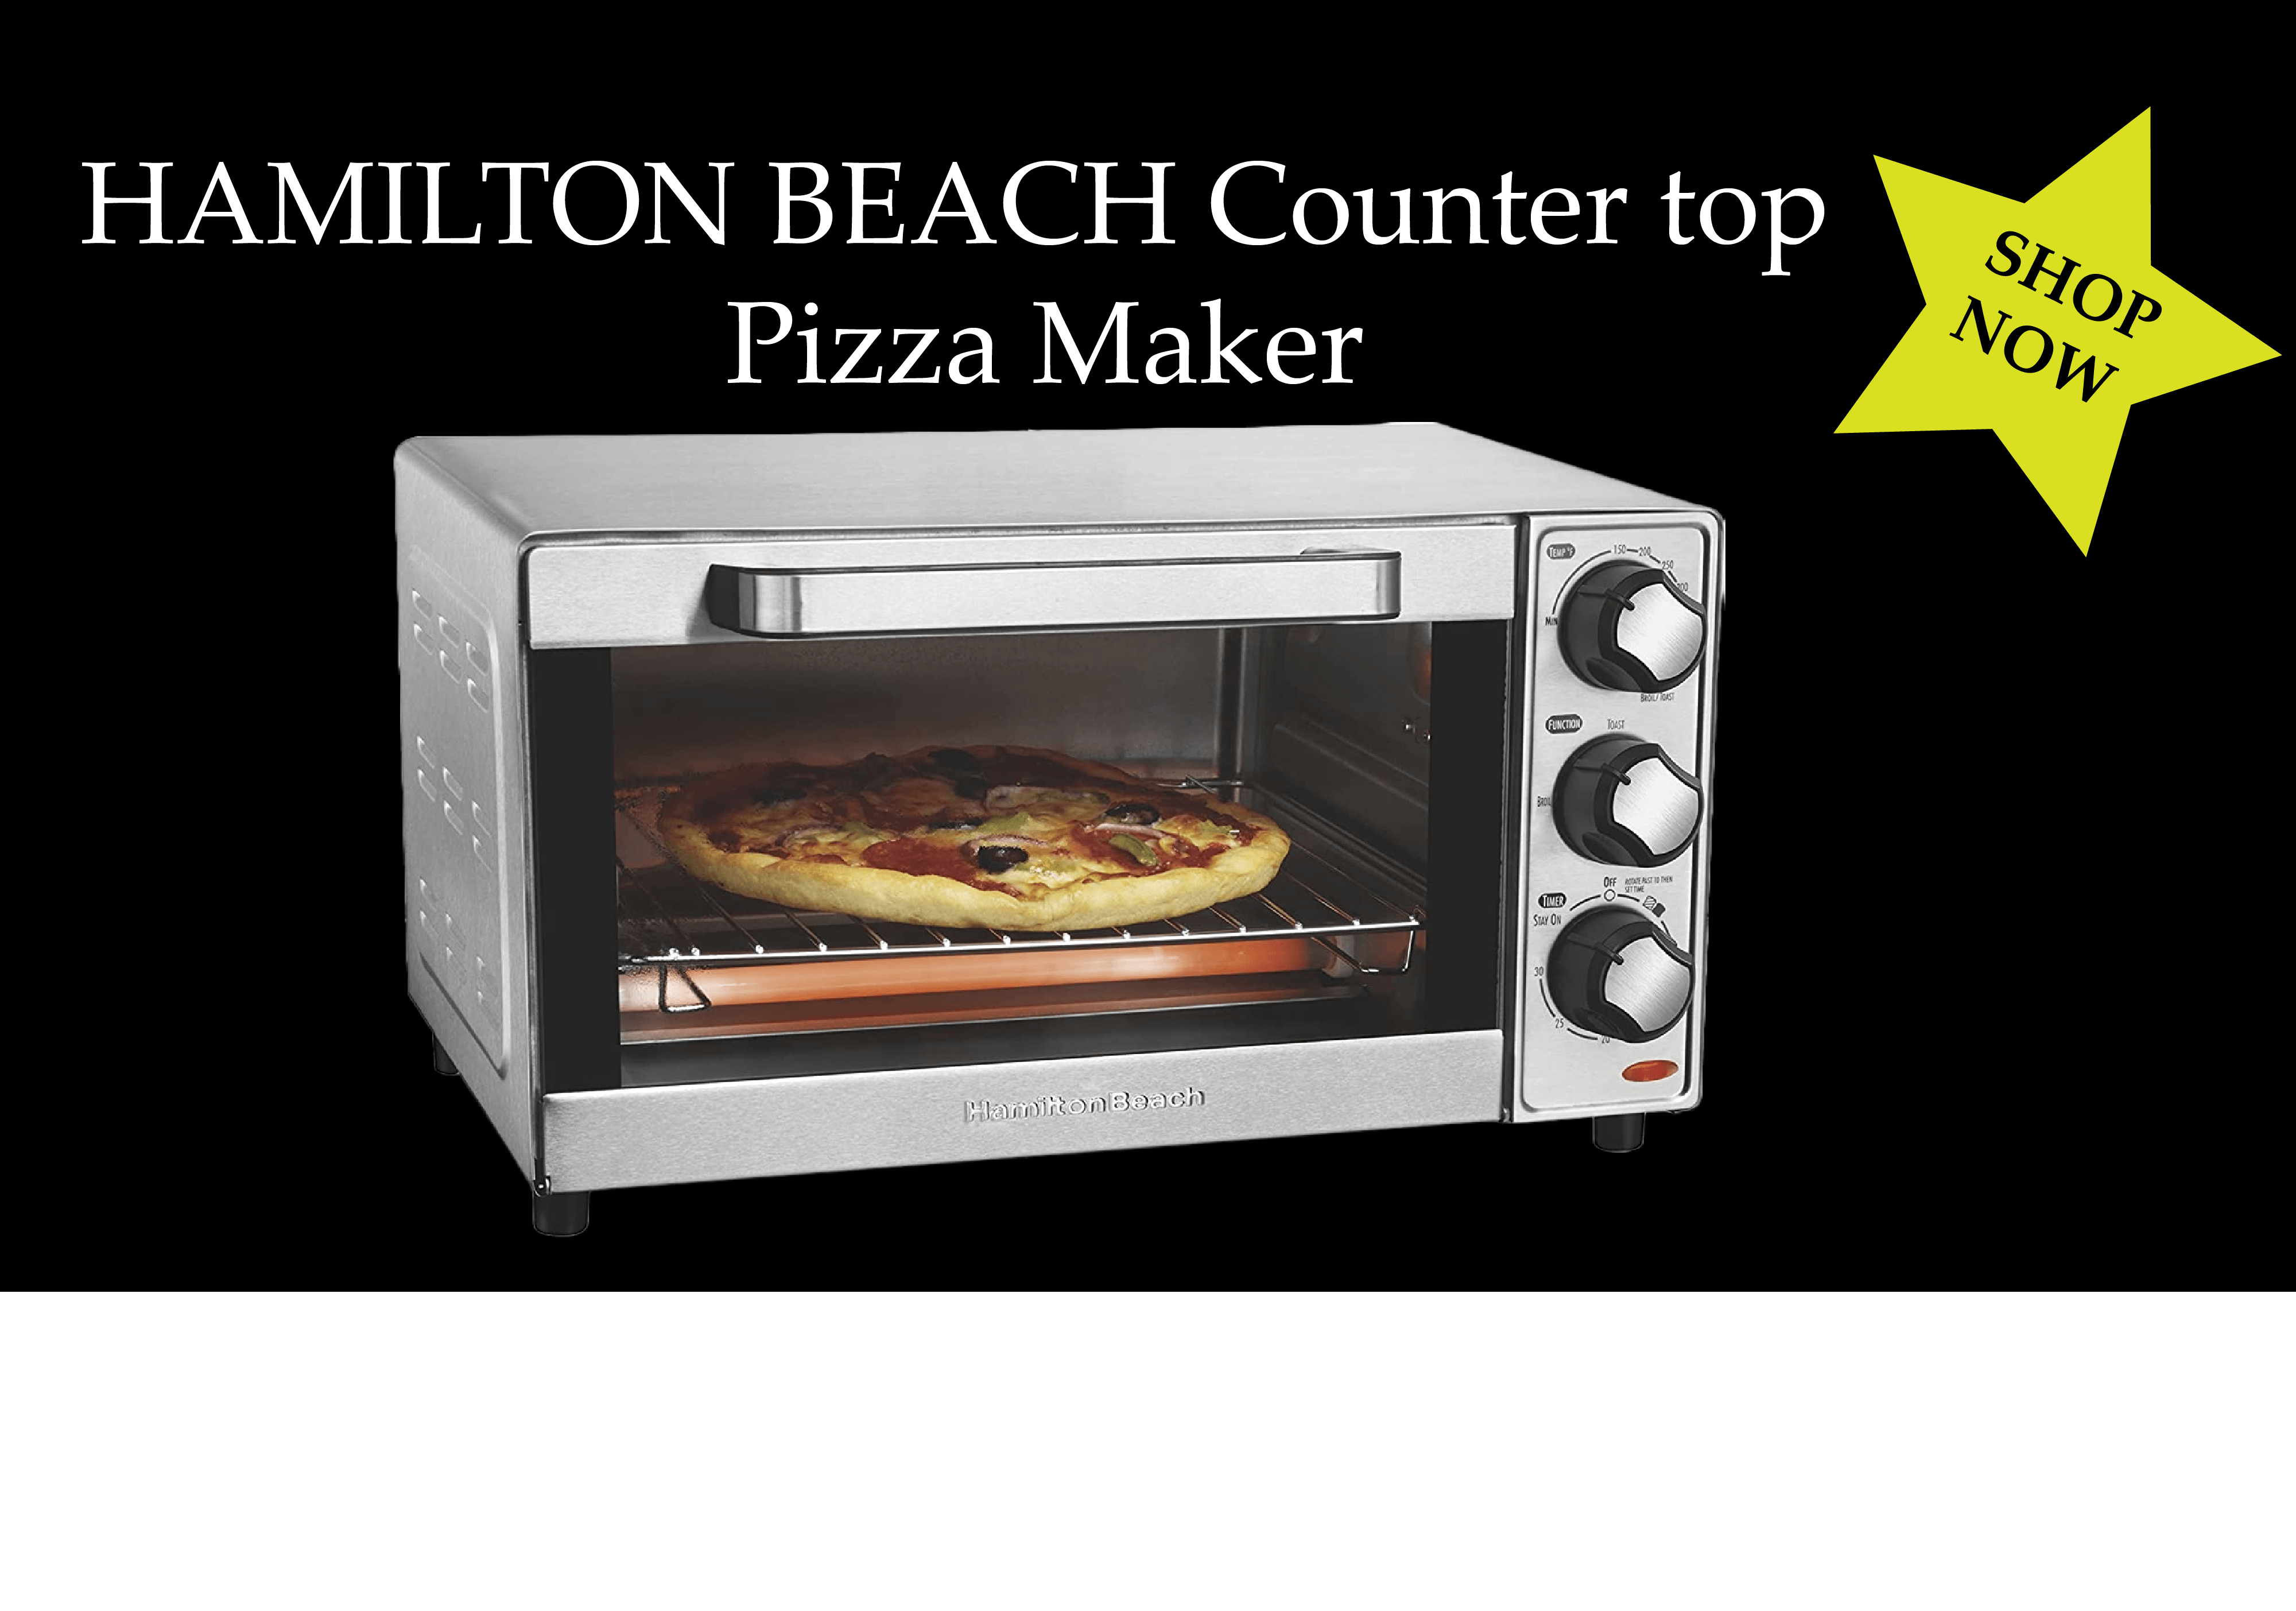 Hamilton Beach countertop pizza maker with black background